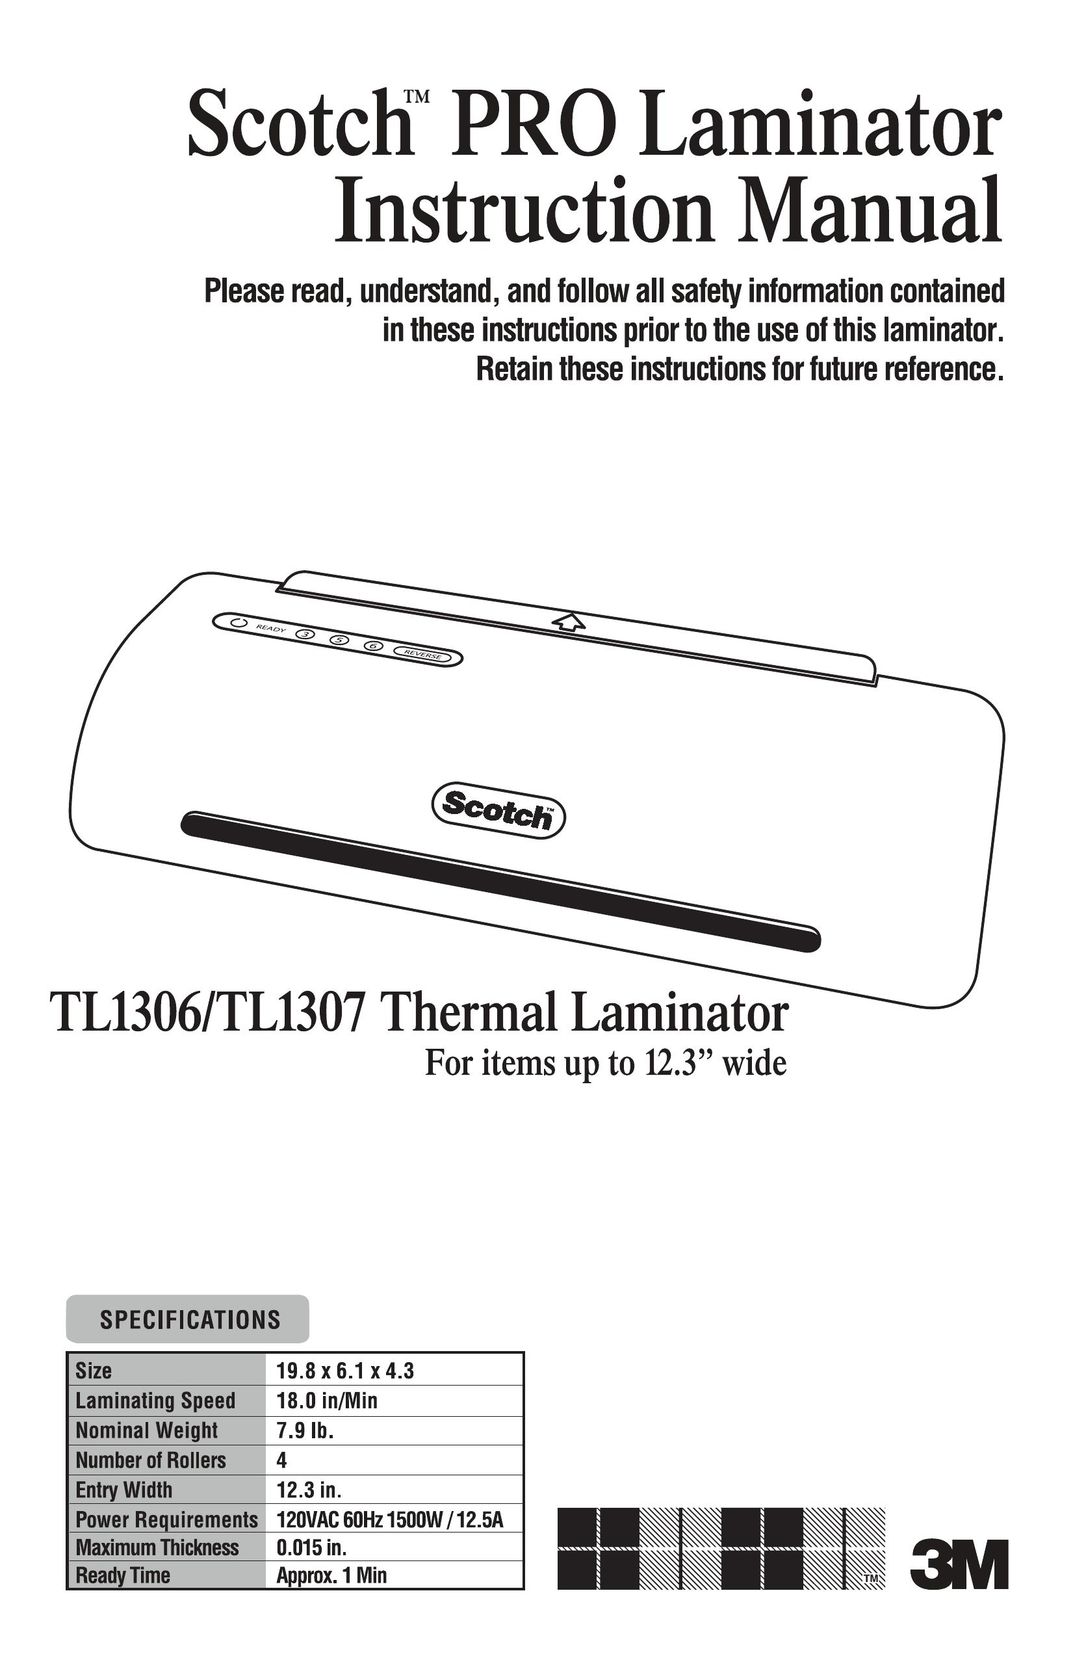 3M TL1306/TL1307 Laminator User Manual